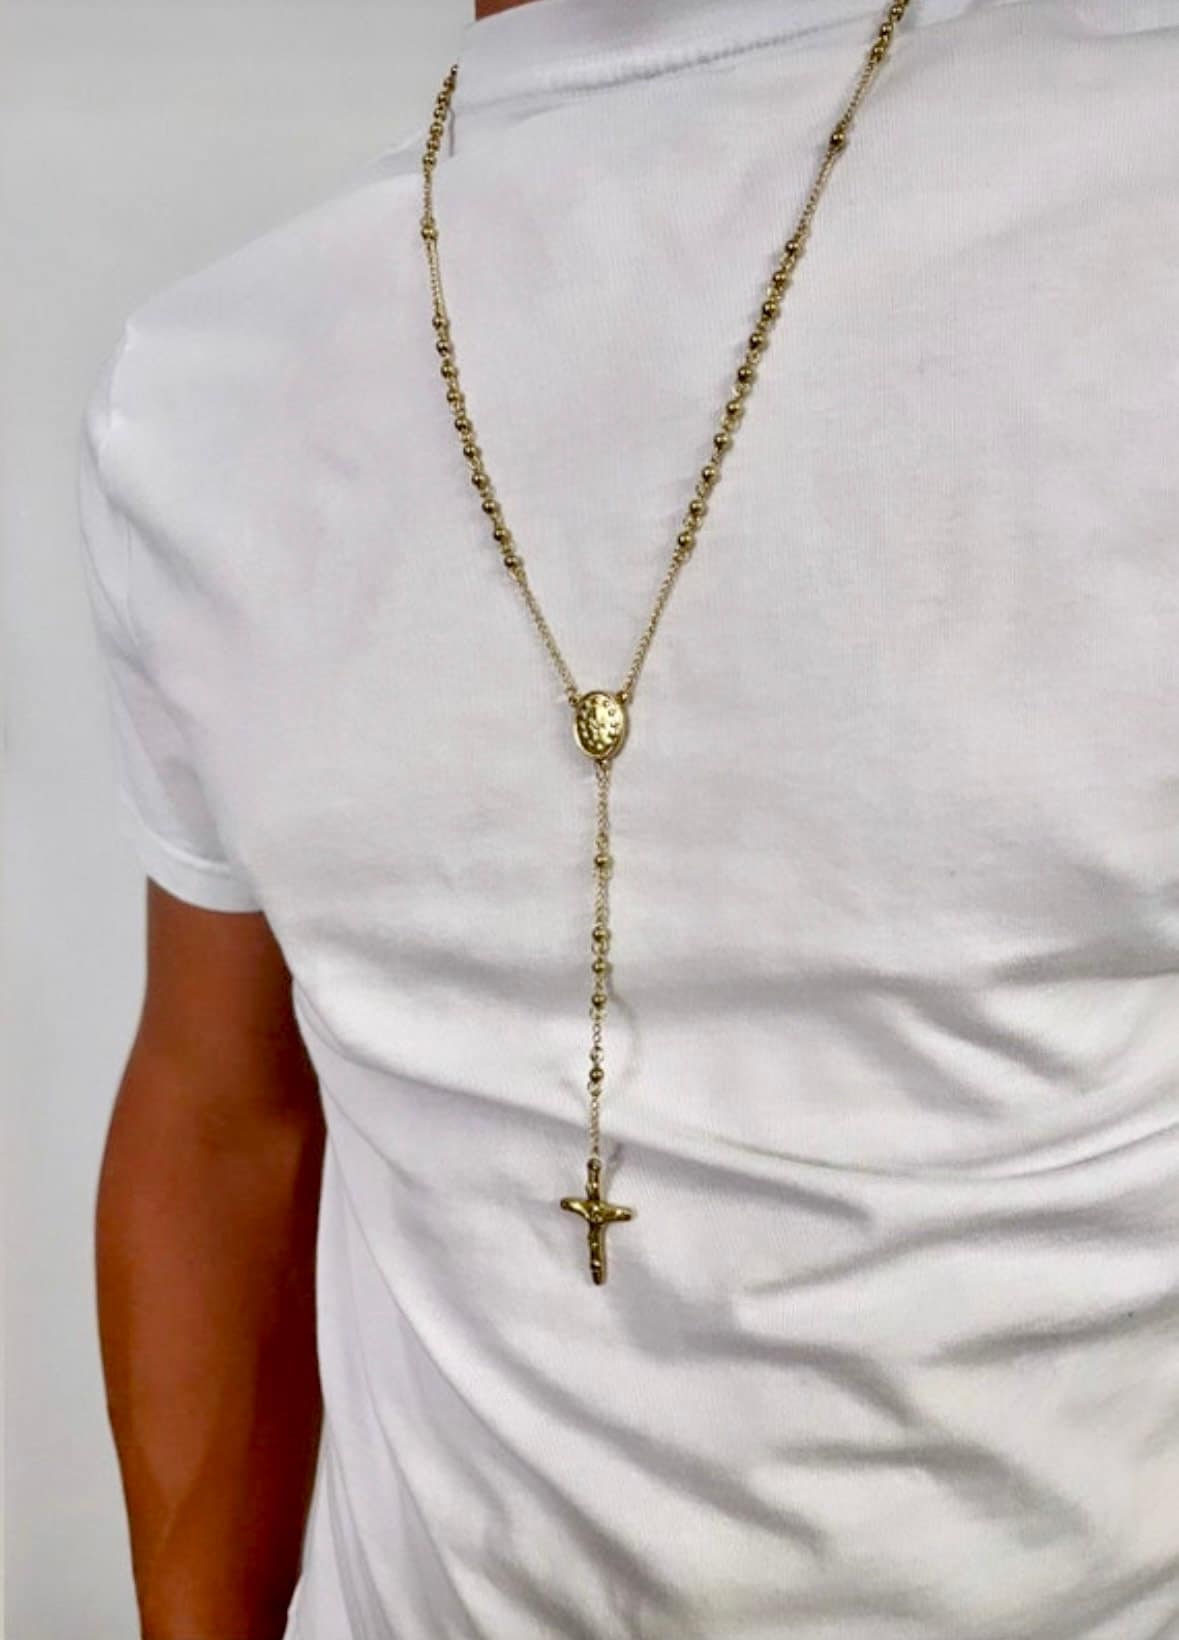 Buy CResha Black Metal Jesus Cross Crucifix Rosary Prayer Bead Necklace  Christian Jewellery for Men and Women at Amazon.in